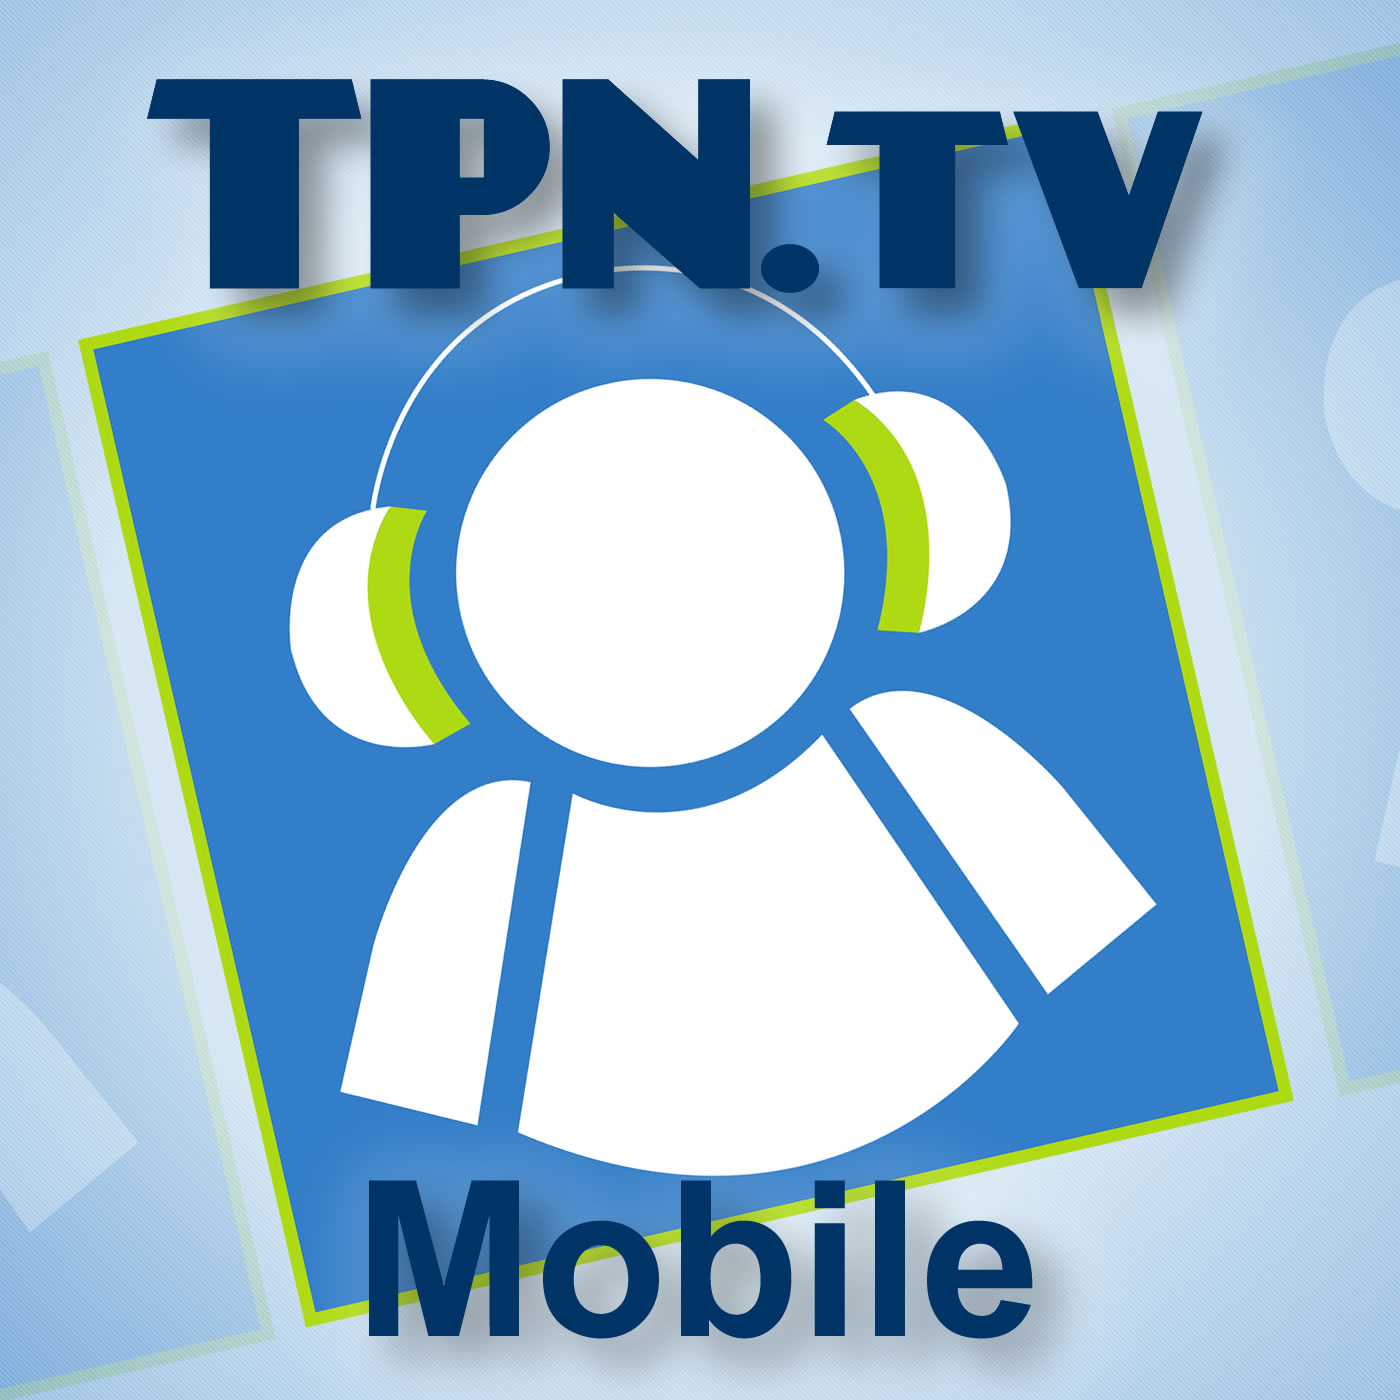 TPN Show Coverage Mobile